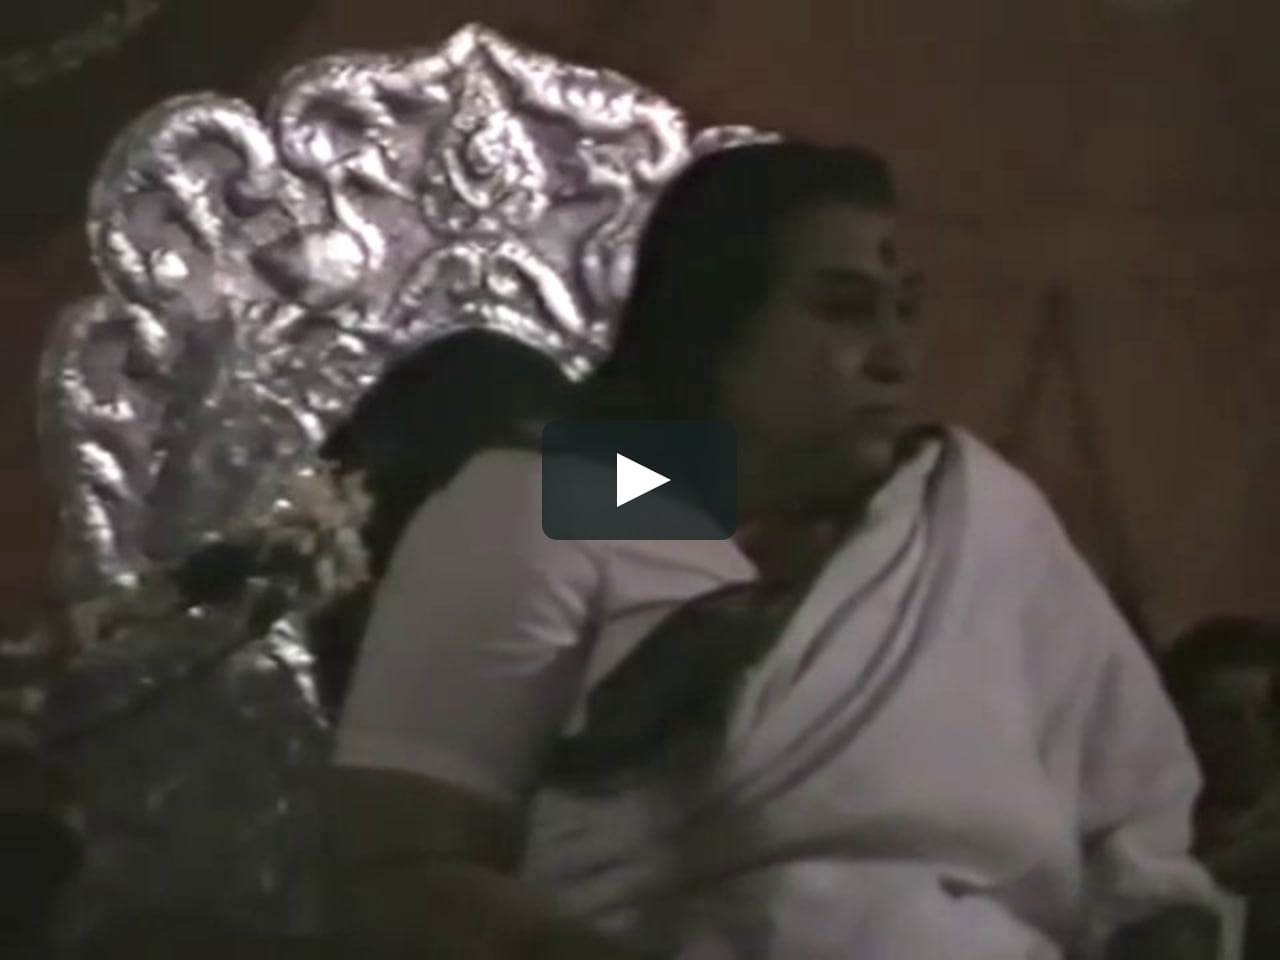 Kolhapur Xvideos - 1991-1220 Public Program Kolhapur (Hindi) on Vimeo